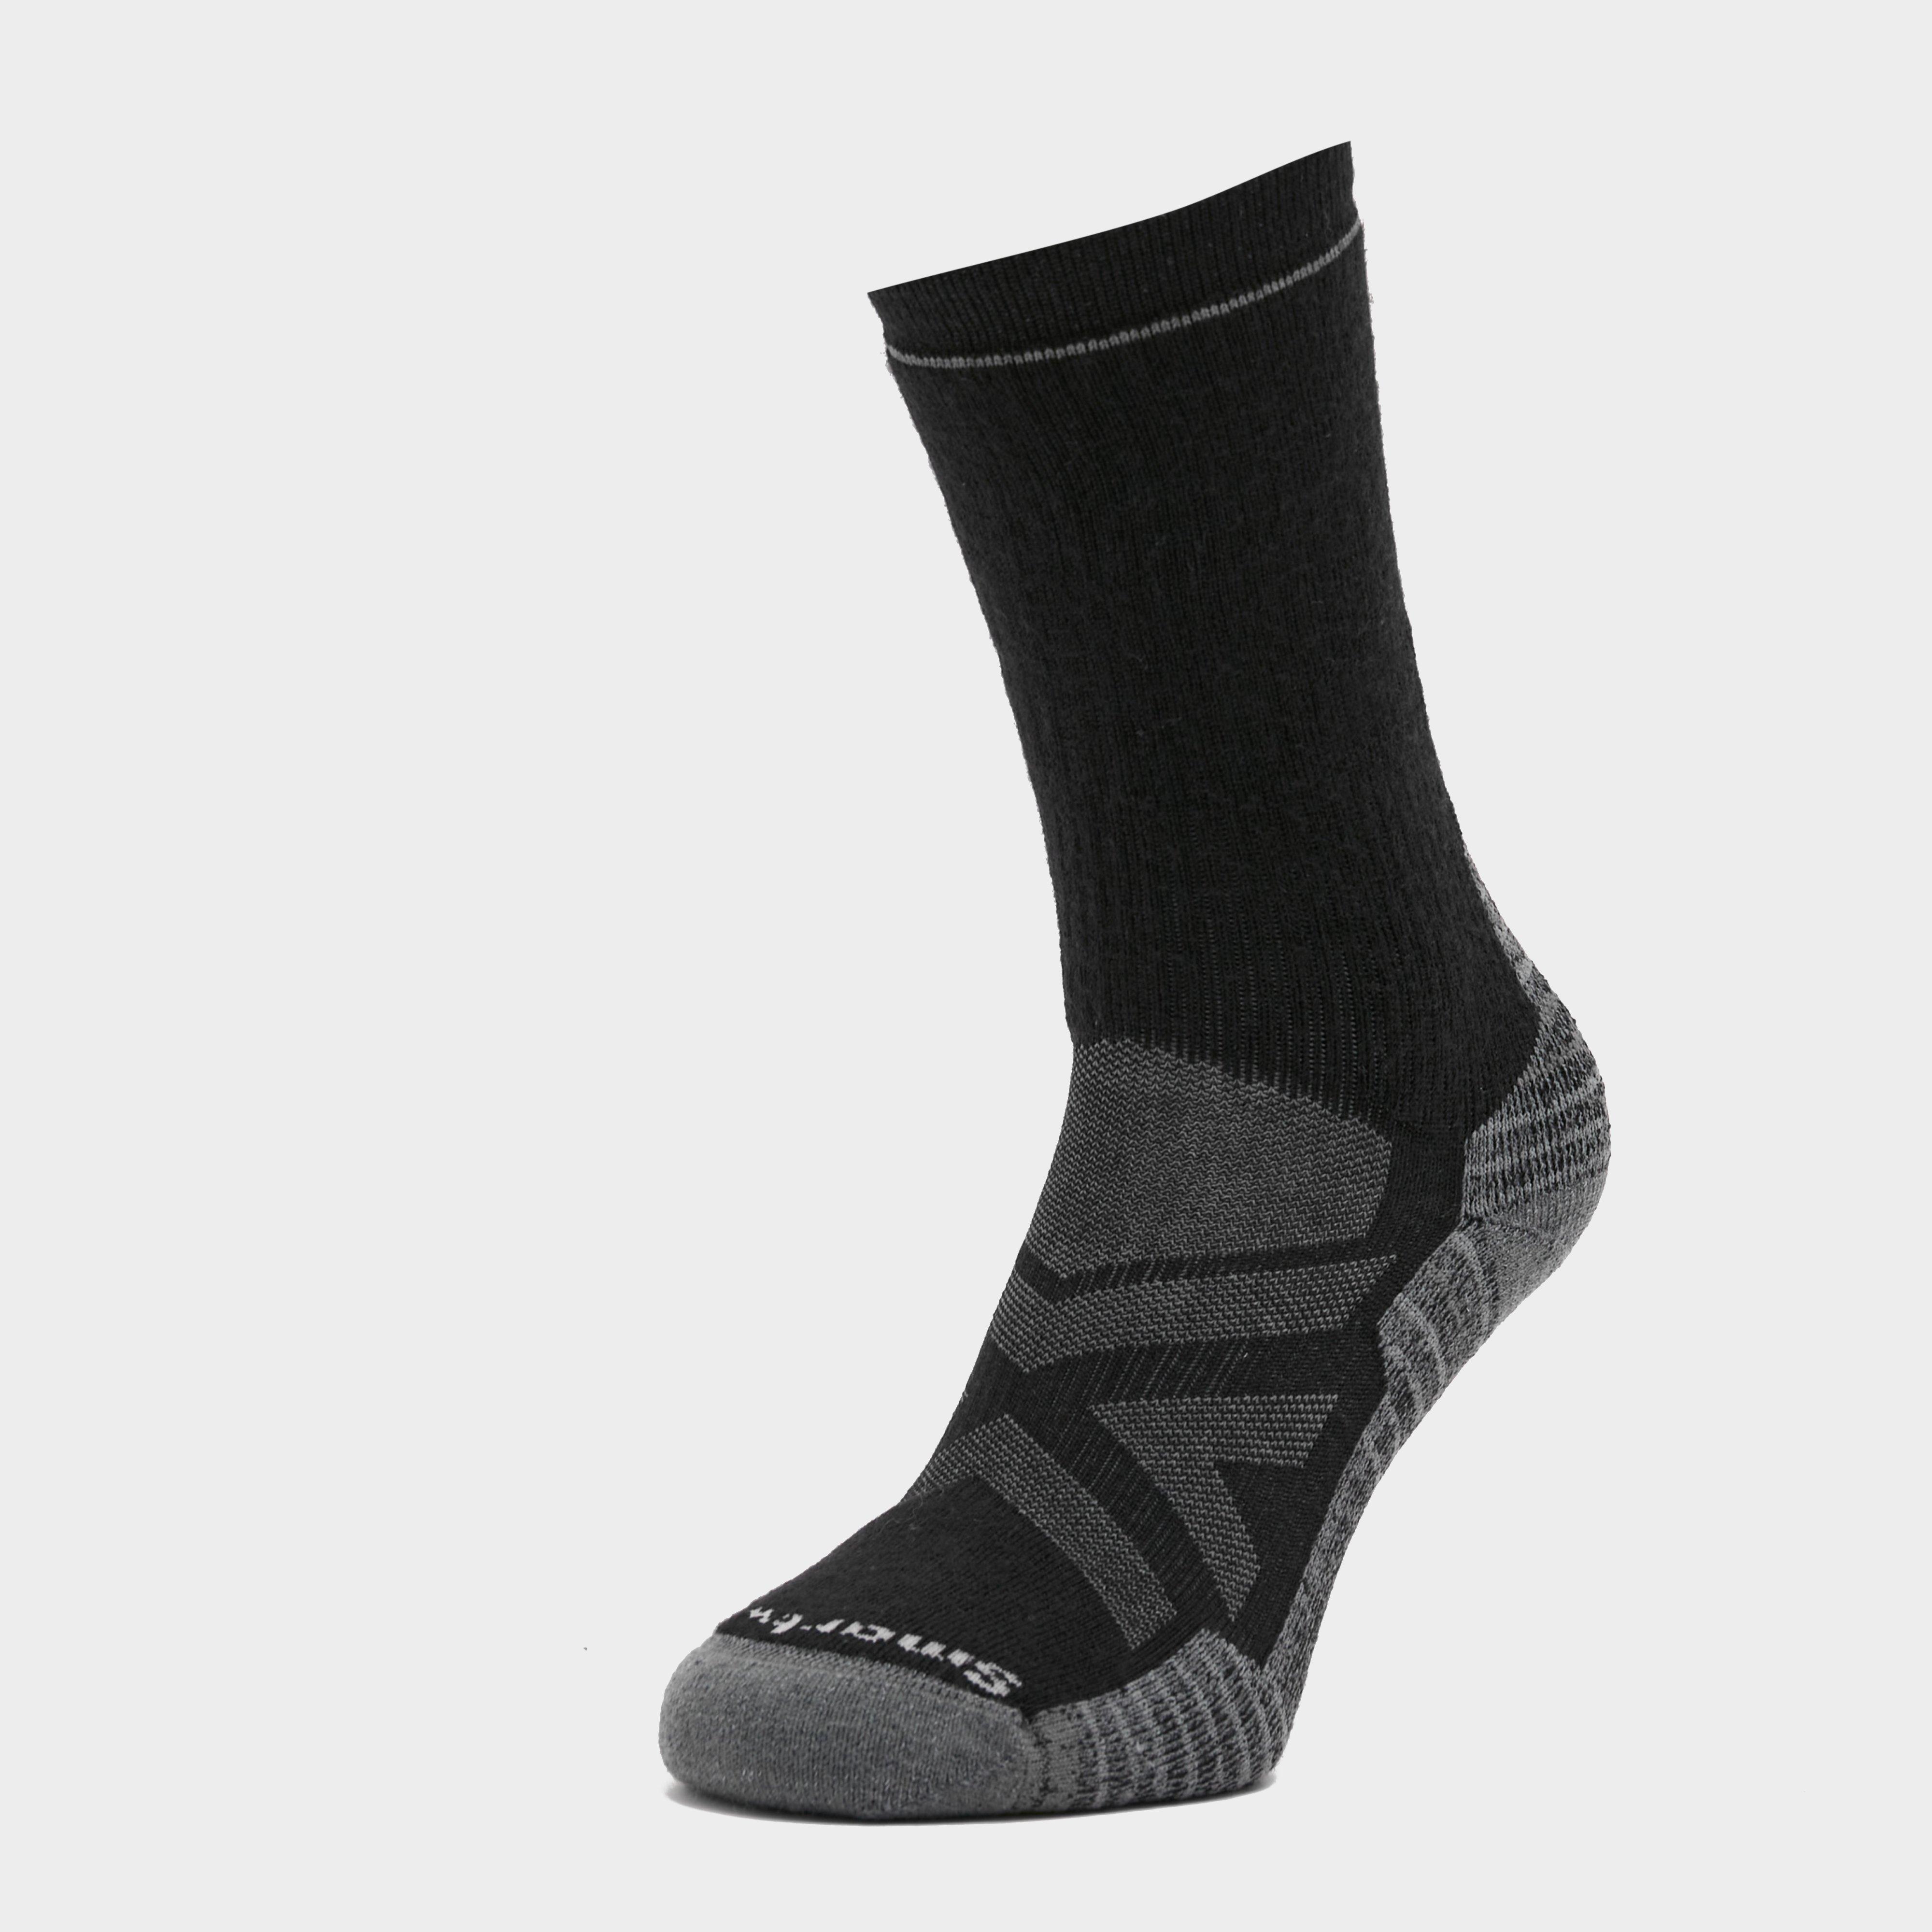 Smartwool Mens Hike Full Cushion Crew Socks - Black/crw  Black/crw